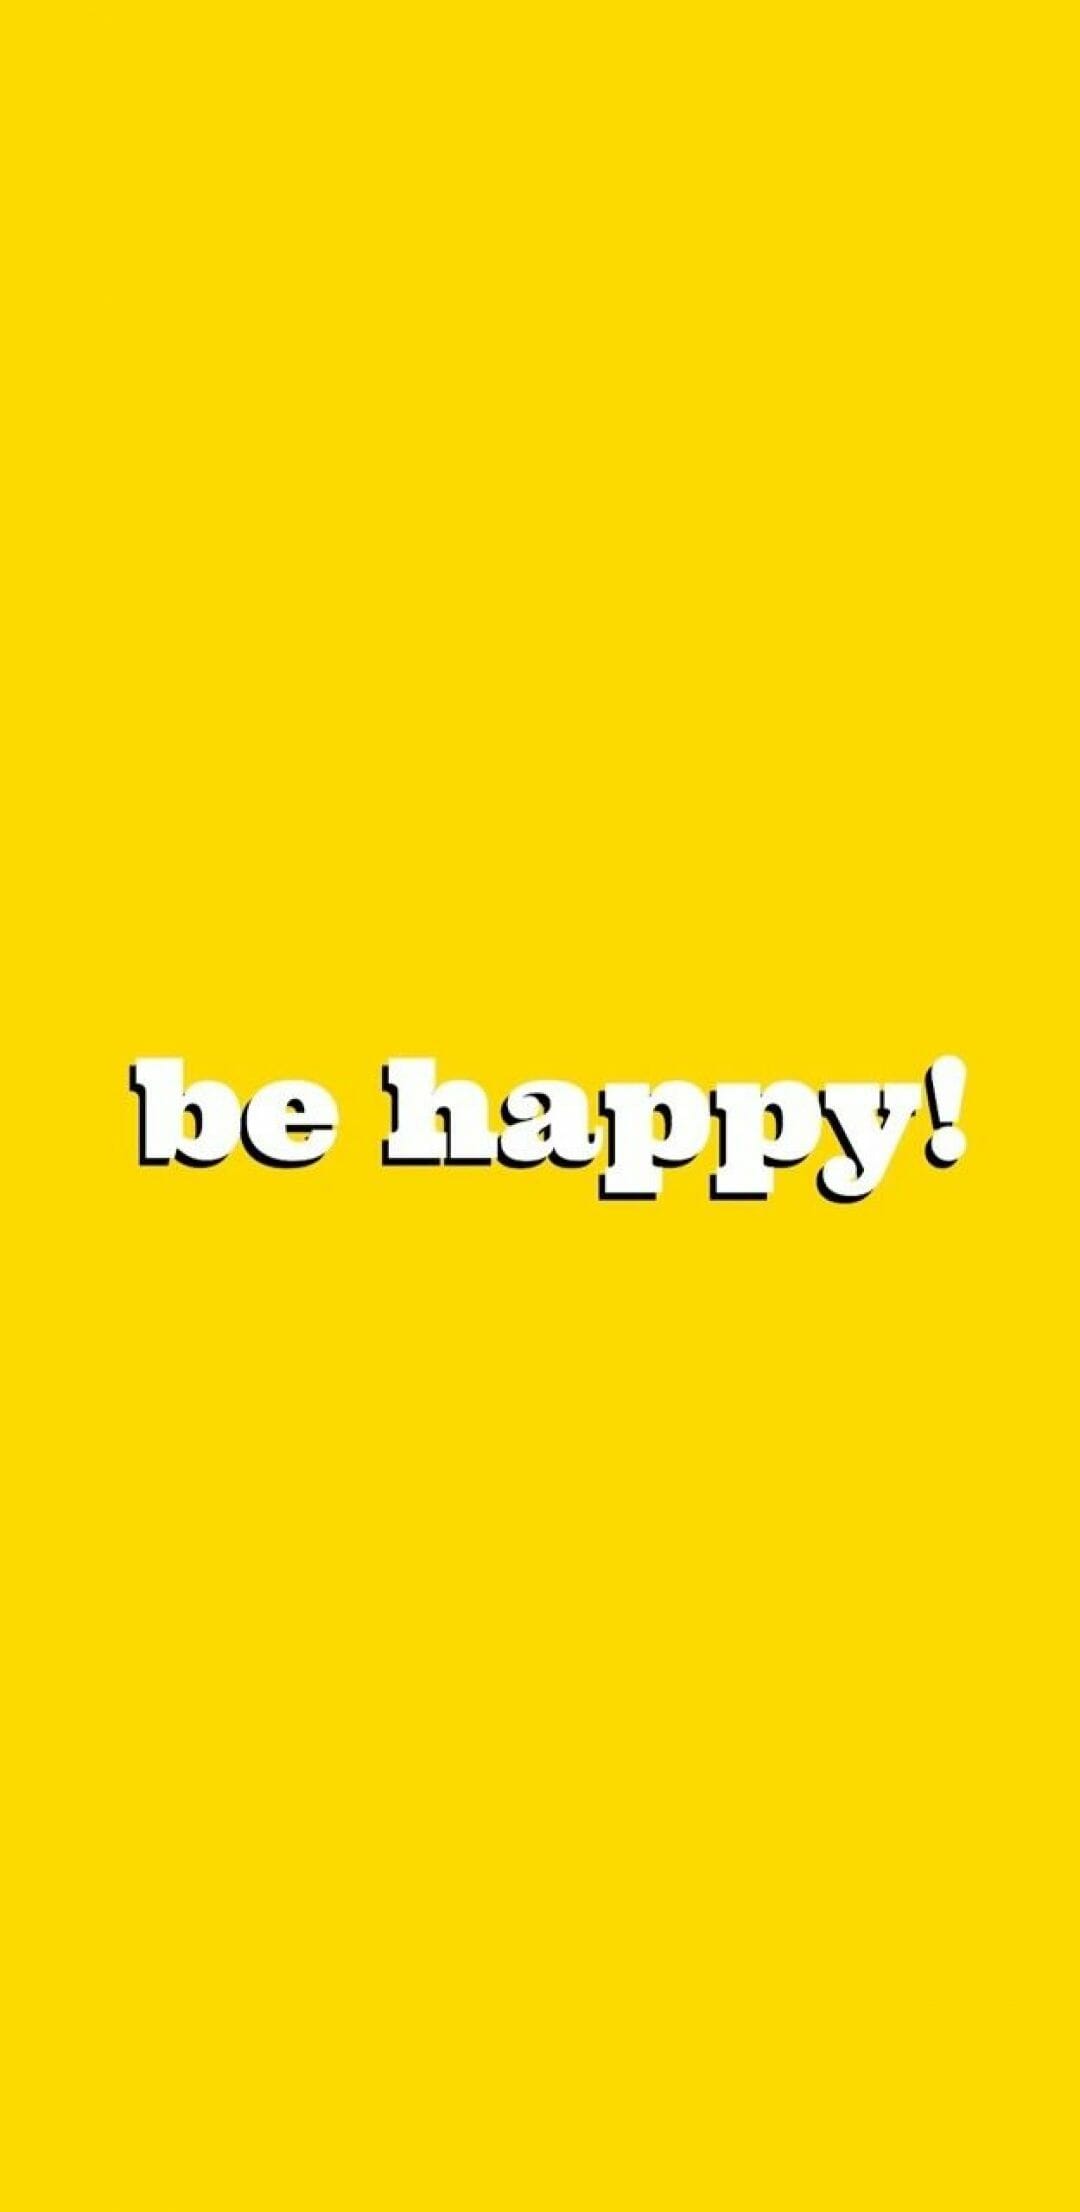 Be happy wallpaper for your desktop - Yellow, happy, motivational, inspirational